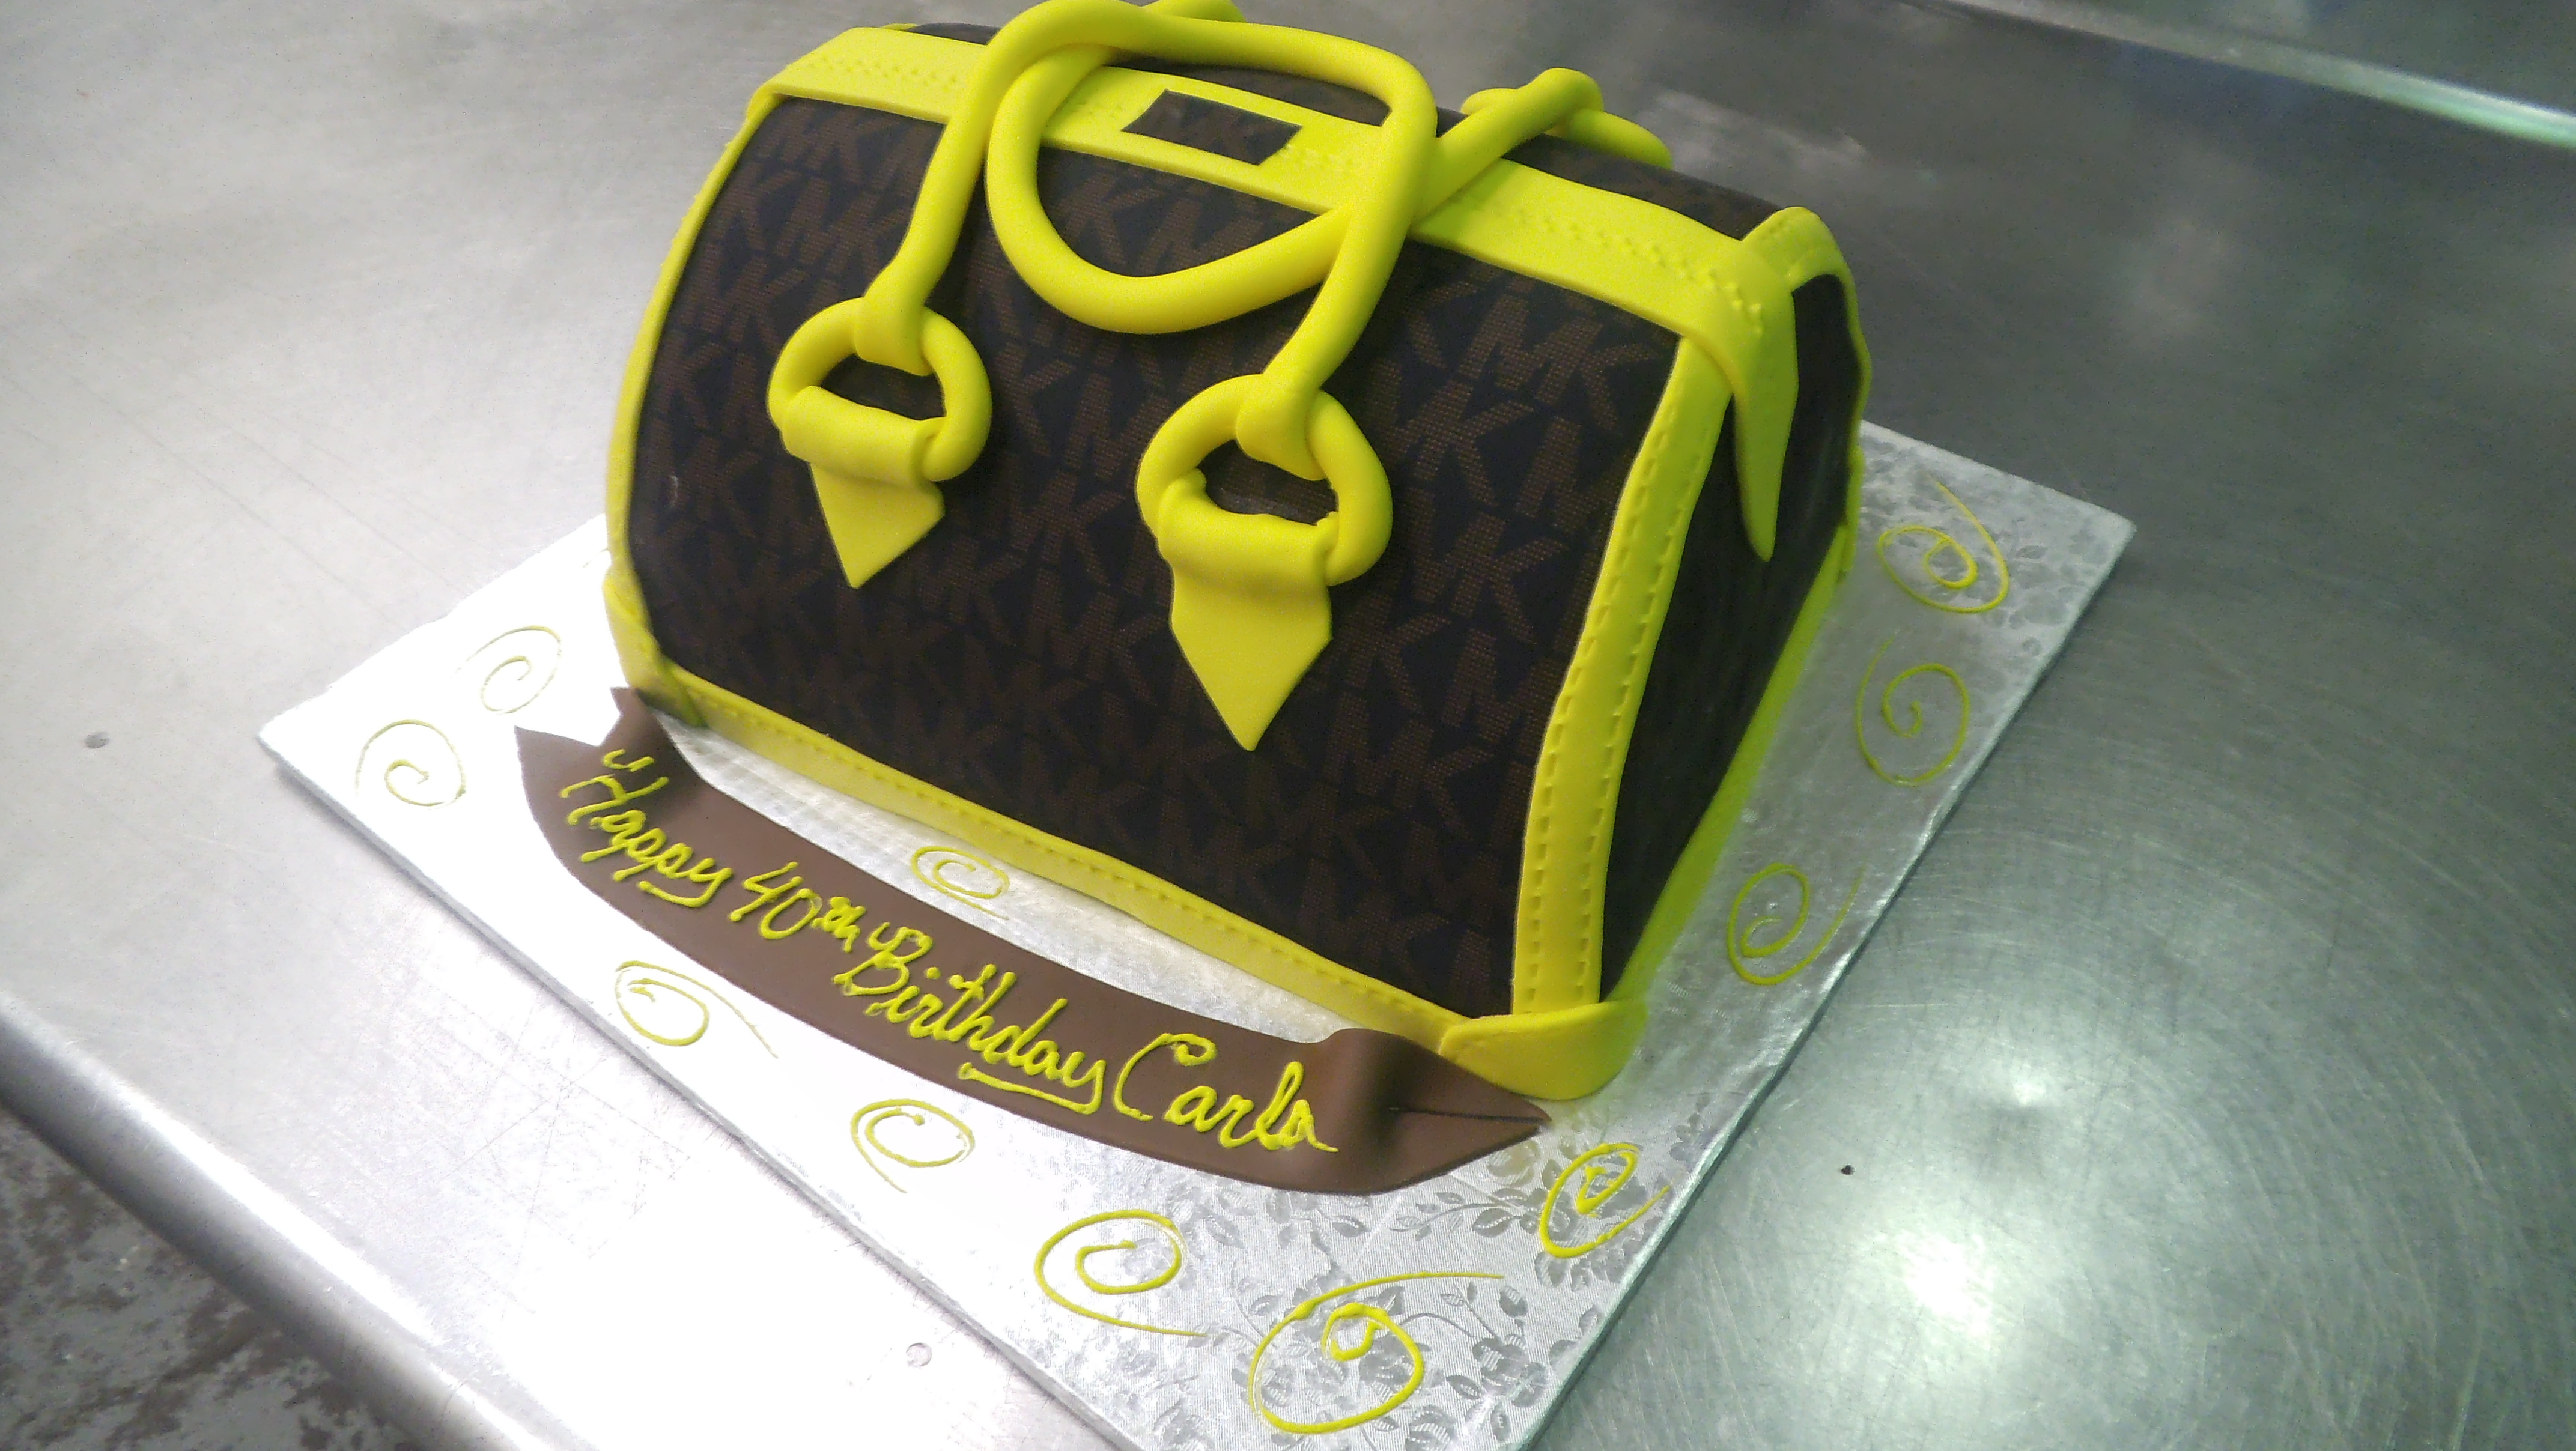 Designer Cake- Purse Design – LFB Foods